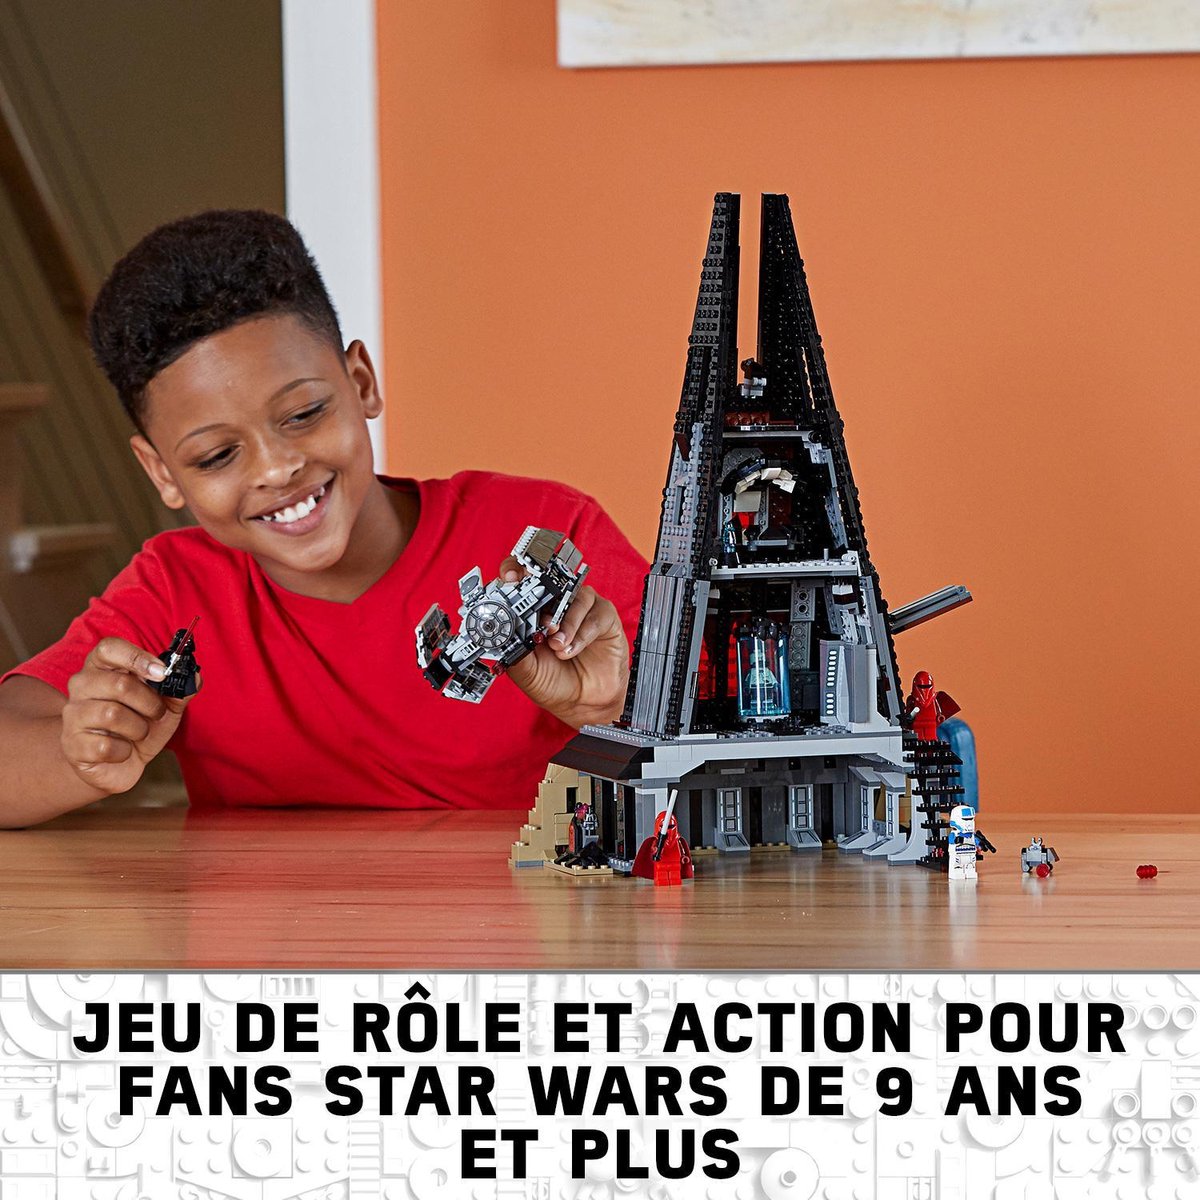 LEGO Star Wars 75251 Le château de Dark Vador, Jeu de Construction